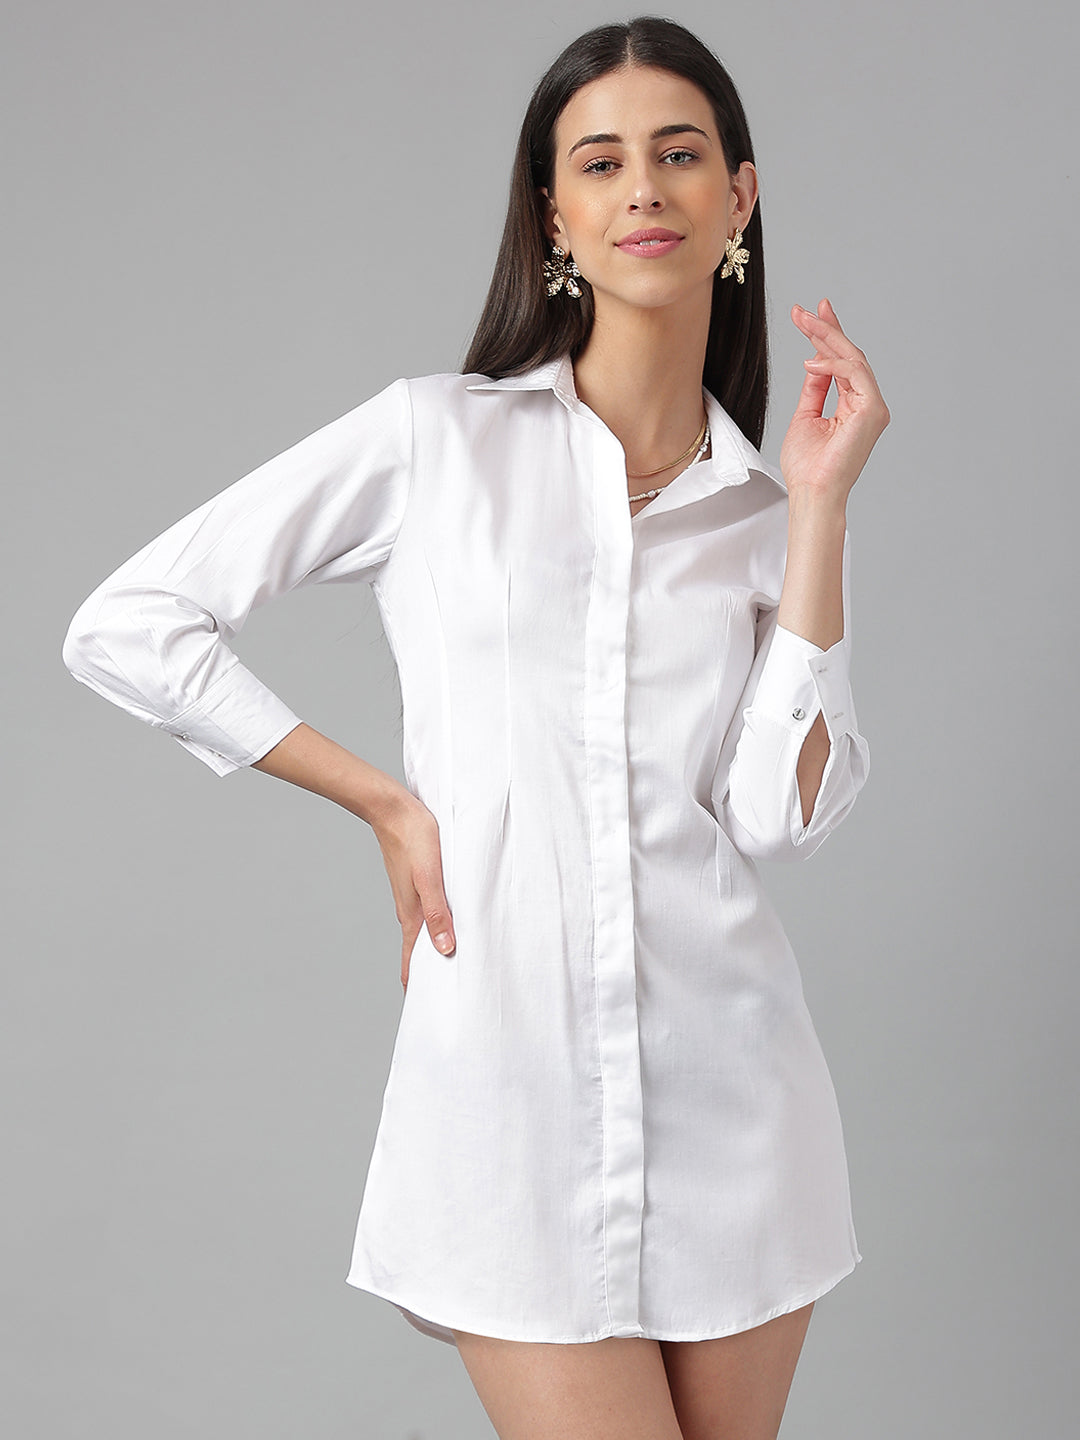 Chic White Dress Shirt With Black Details | ELLA HOPFELDT